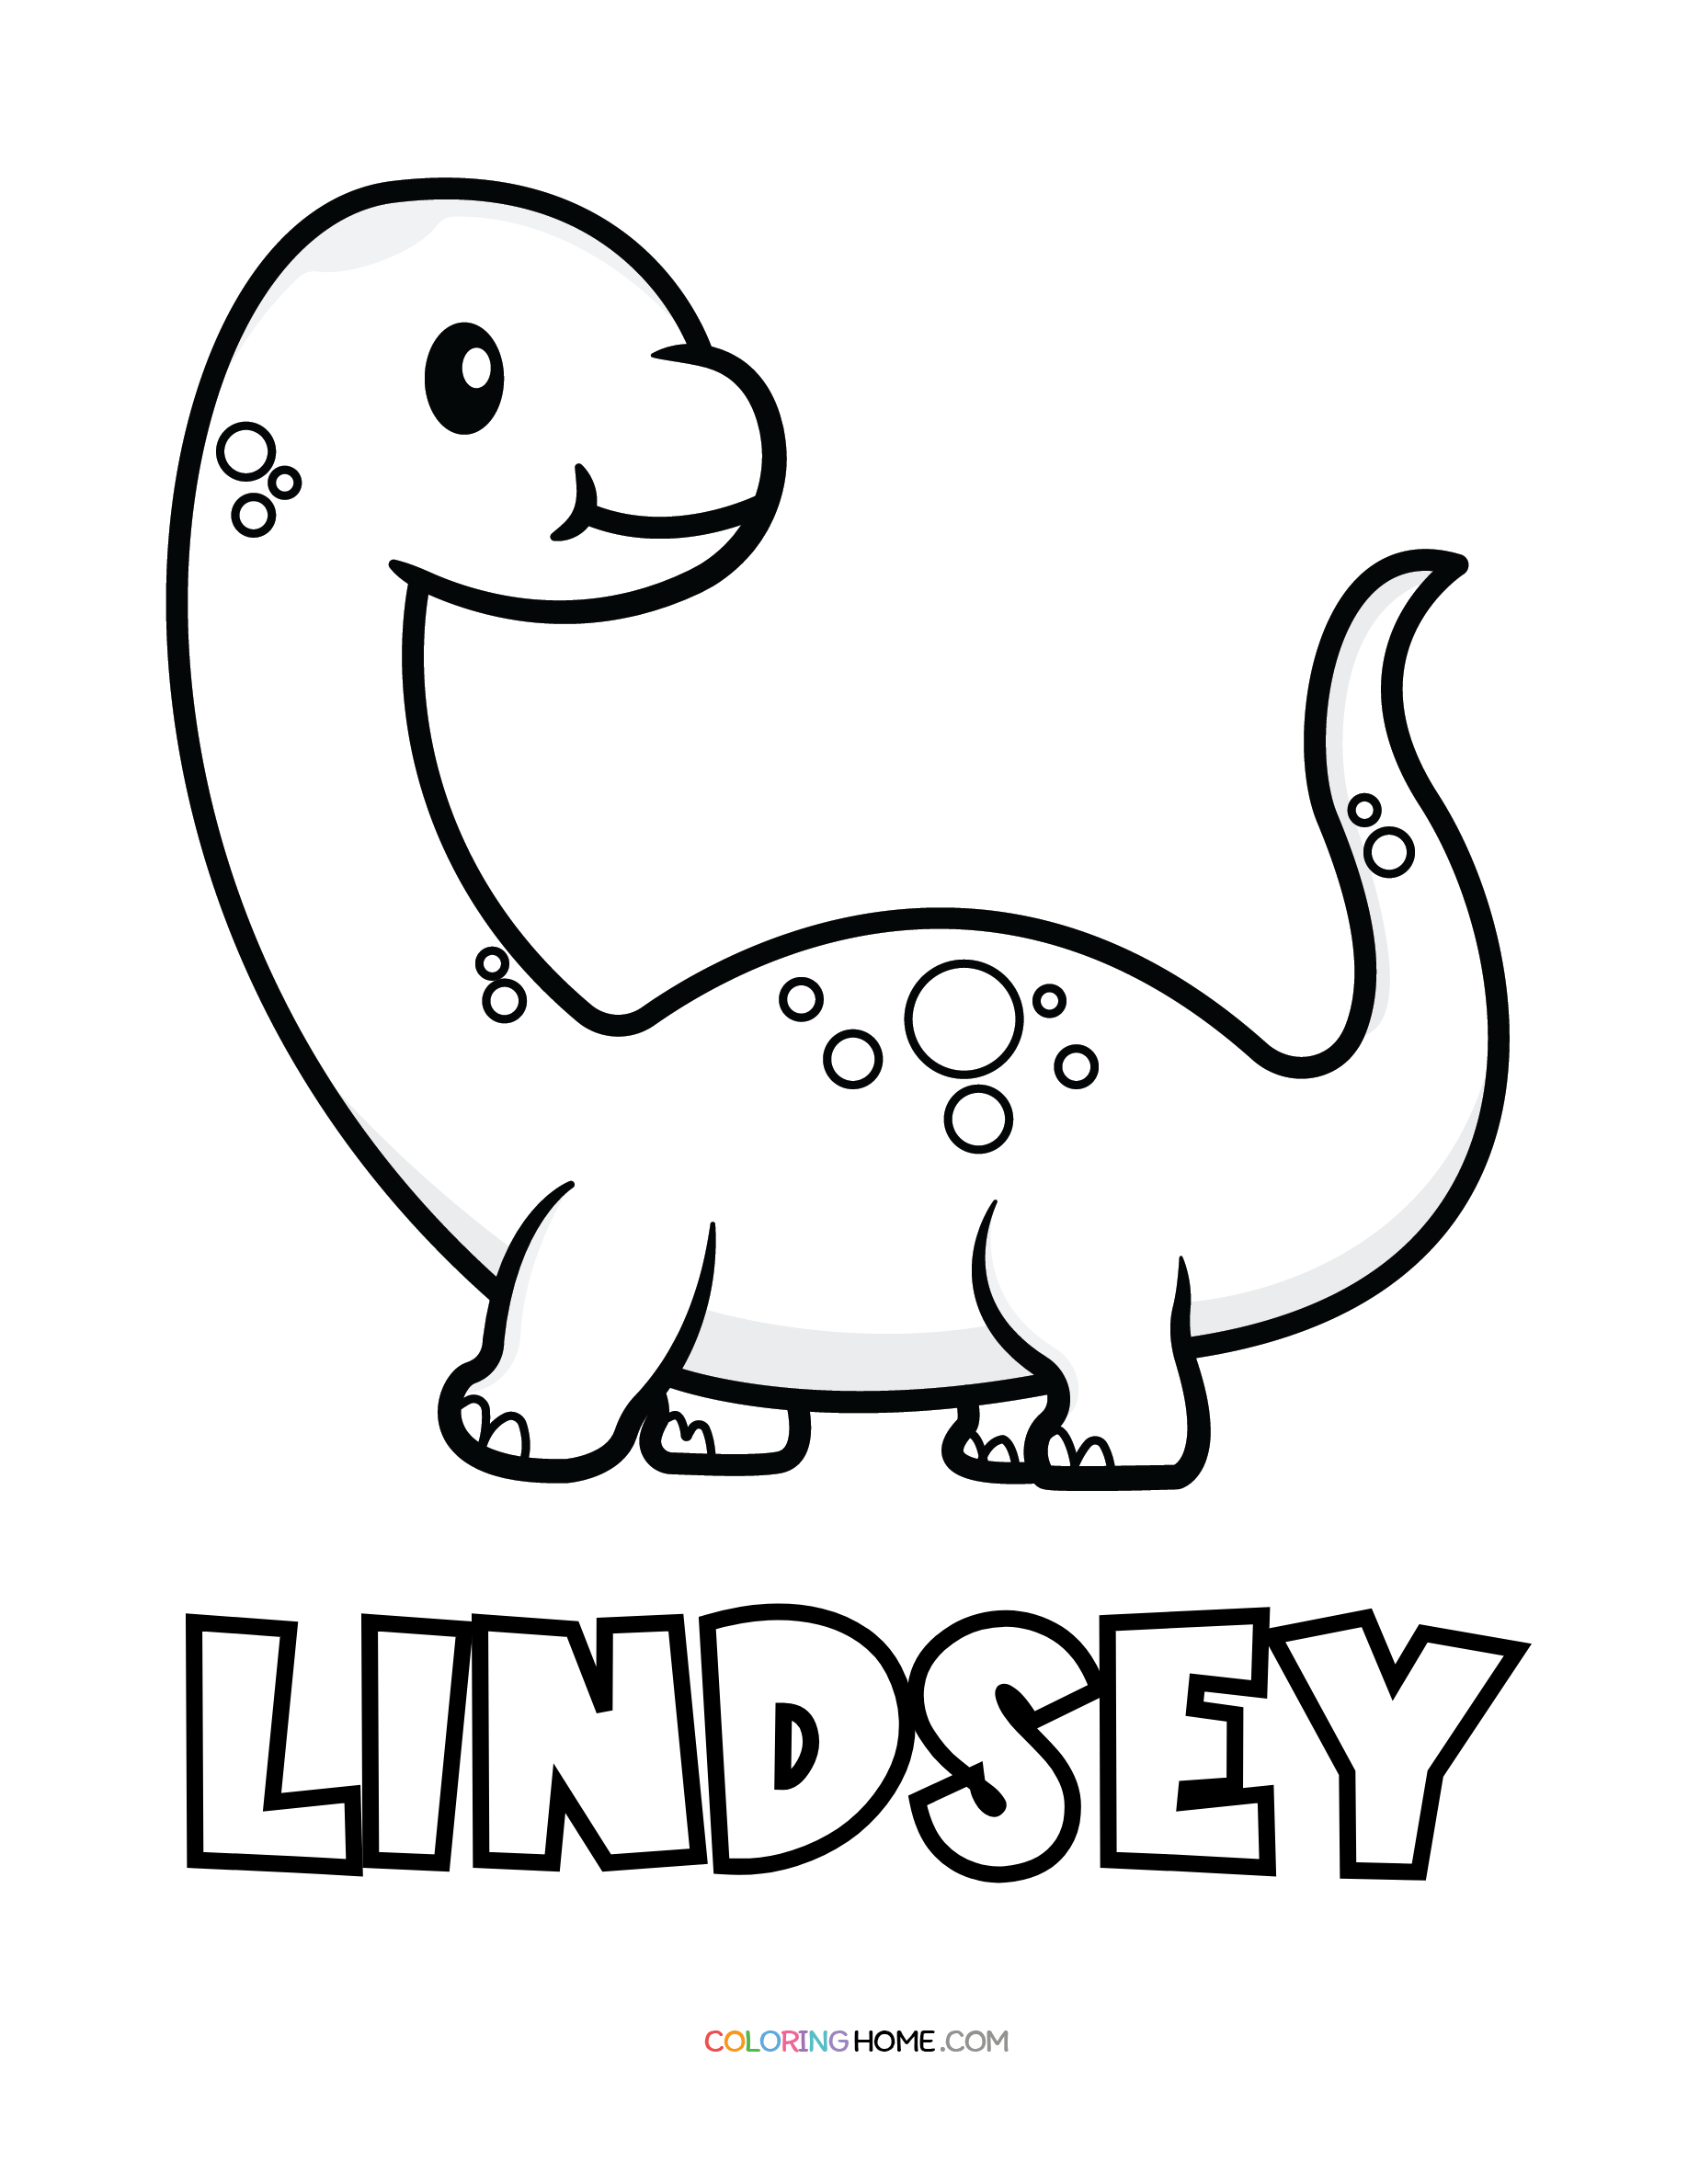 Lindsey dinosaur coloring page